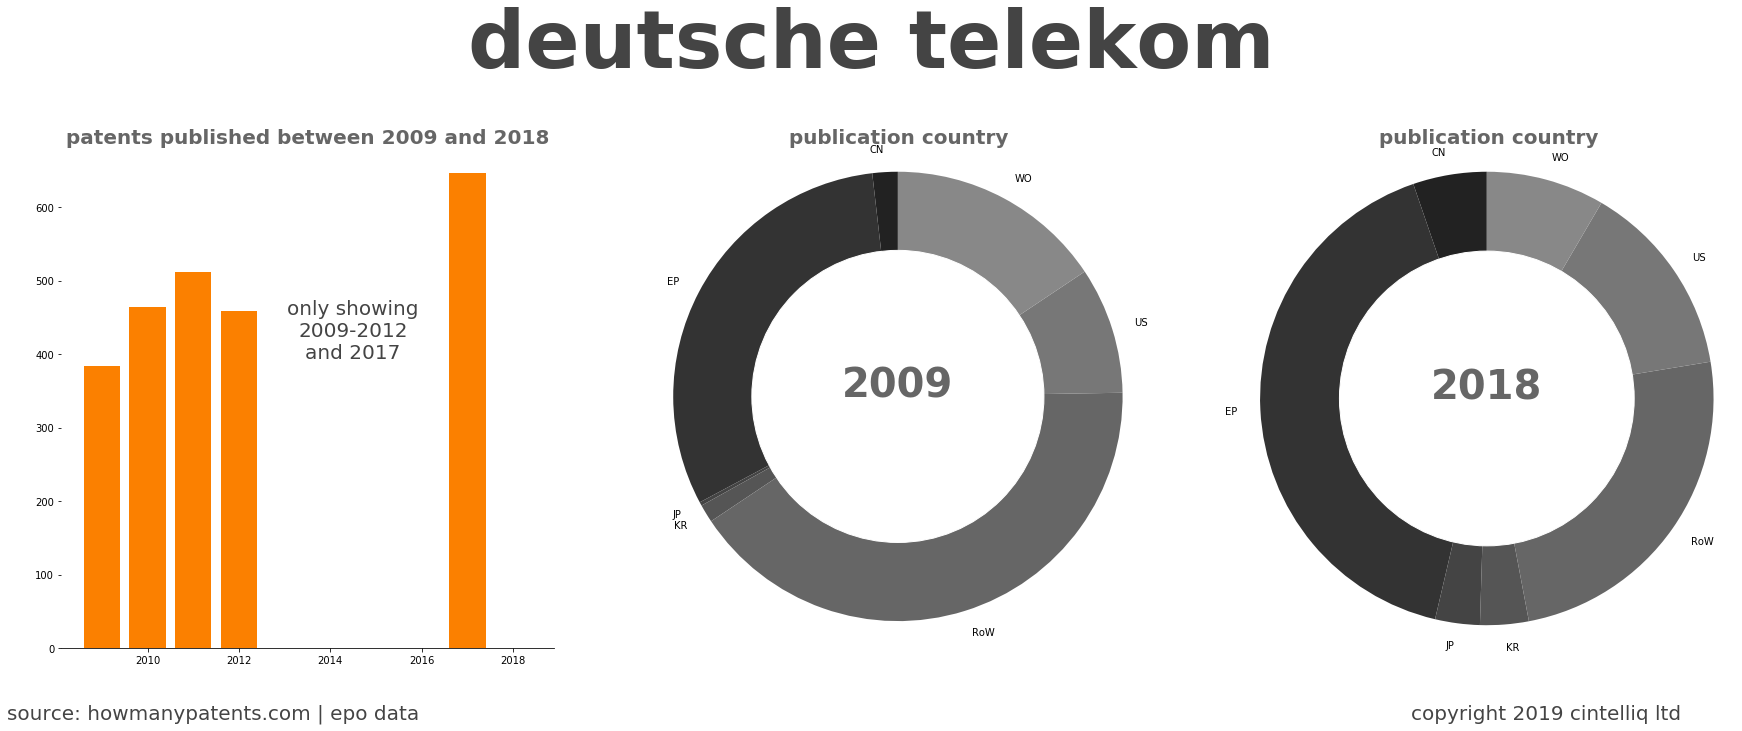 summary of patents for Deutsche Telekom